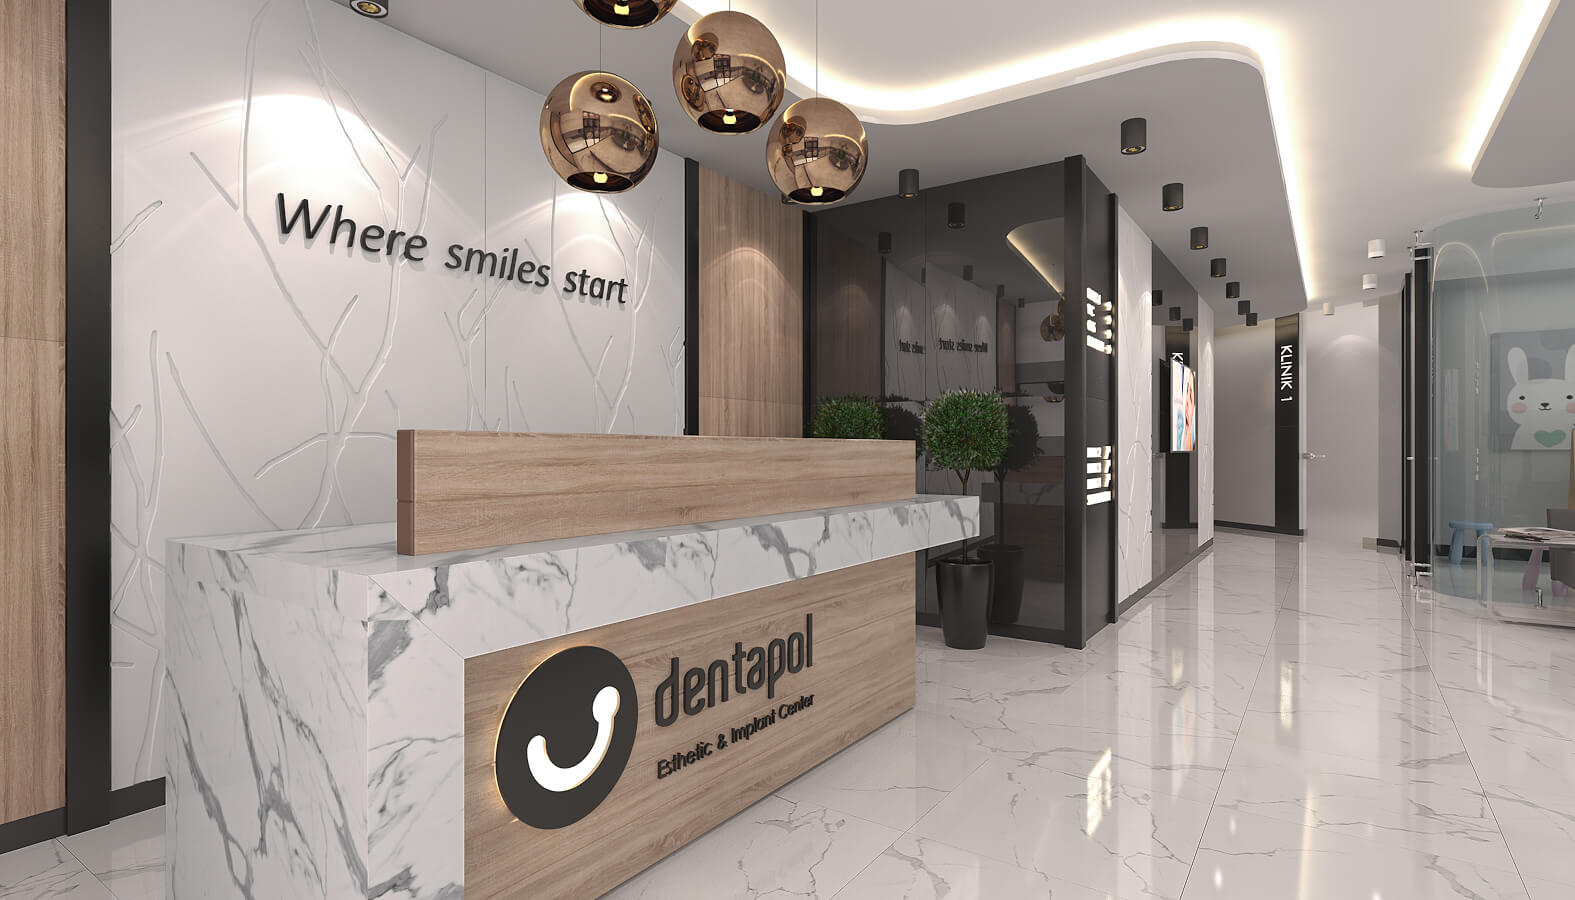  Beauty Center 4568 Dentapol Dental Polyclinic Healthcare